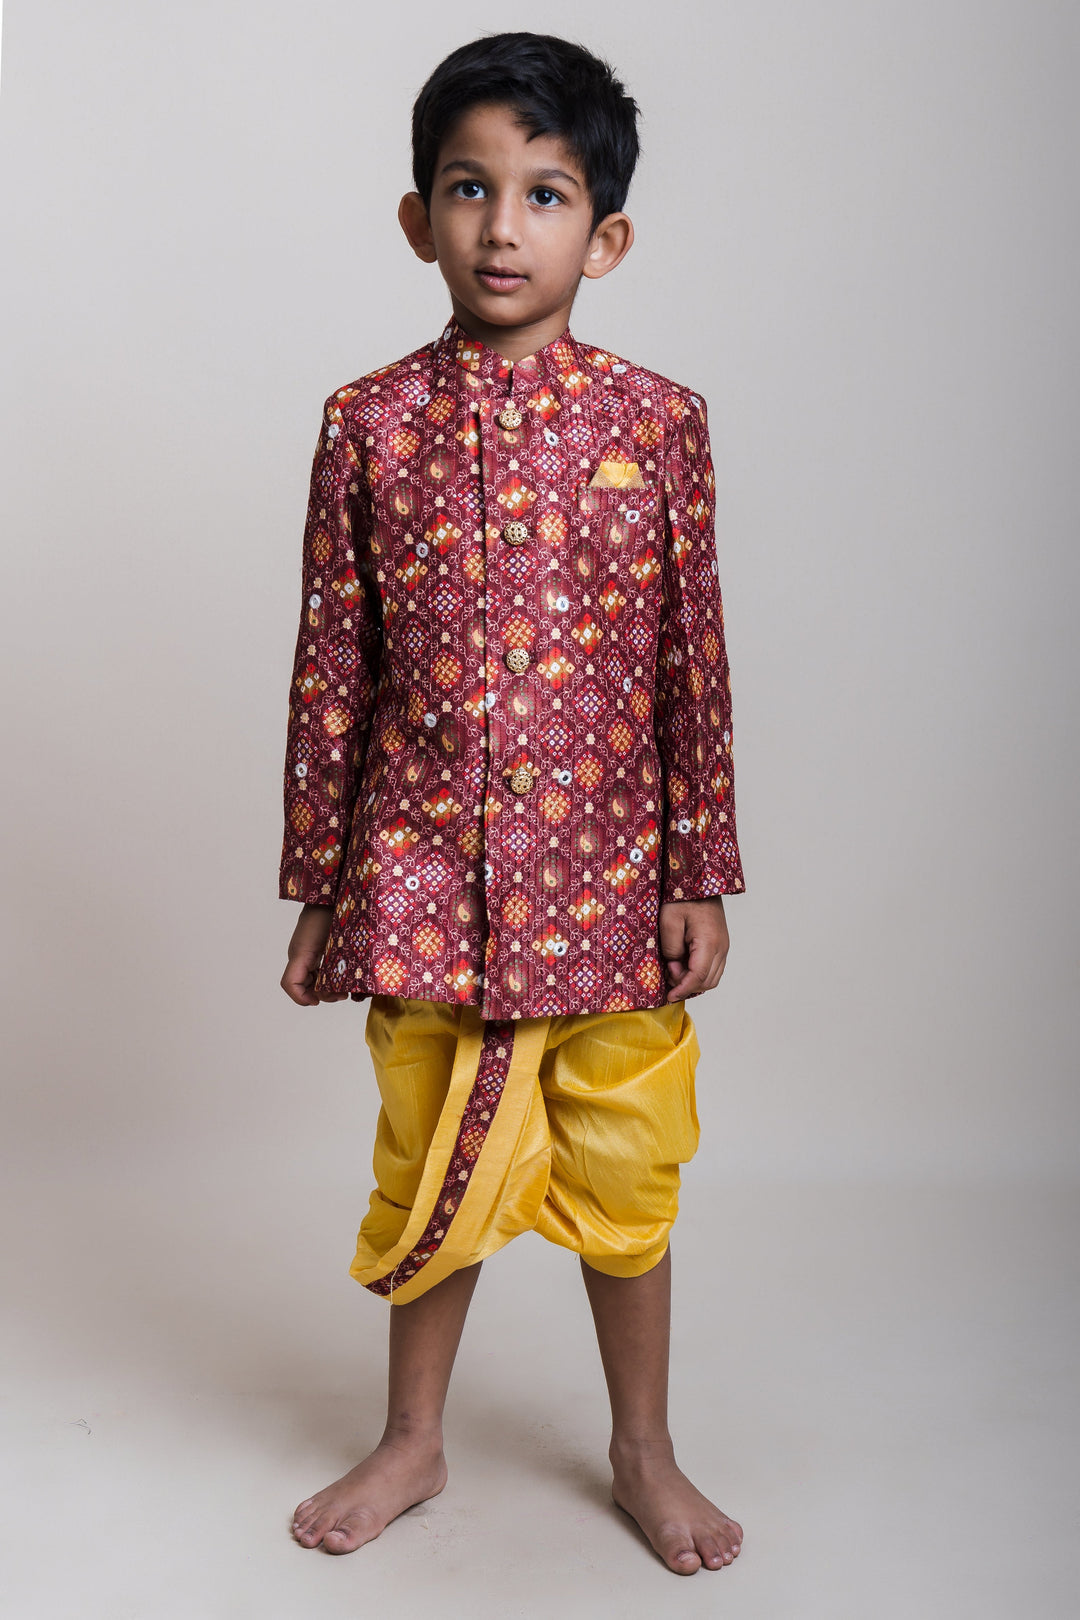 The Nesavu Boys Kurtha Set Bustling Brown Printed Cotton Kurta With Golden Dhoti For Little Boys Nesavu 14 (6M) / Brown / Silk Blend BES260-14 Gold Dhoti And Brown Kurta Wear| Traditional Collection| The Nesavu